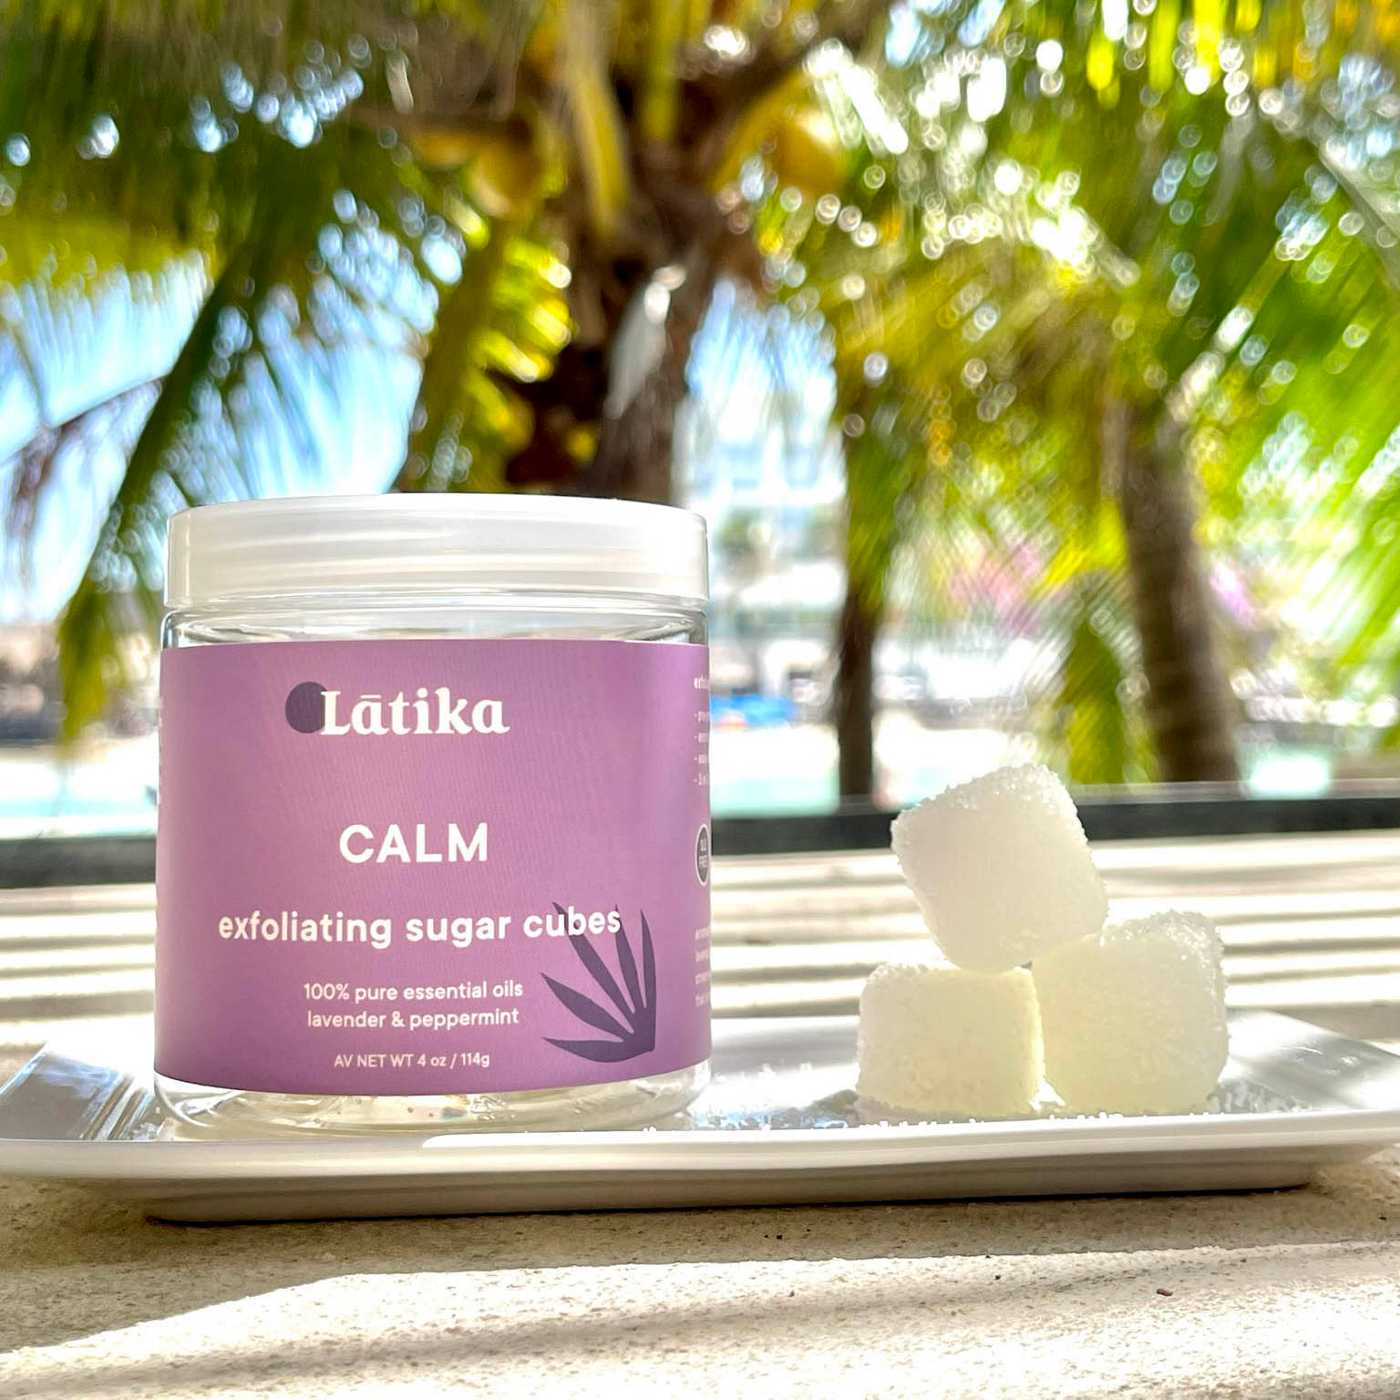 Latika Body Essentials Sugar Cubes Calm with Pure Essential Oils; image 2 of 4